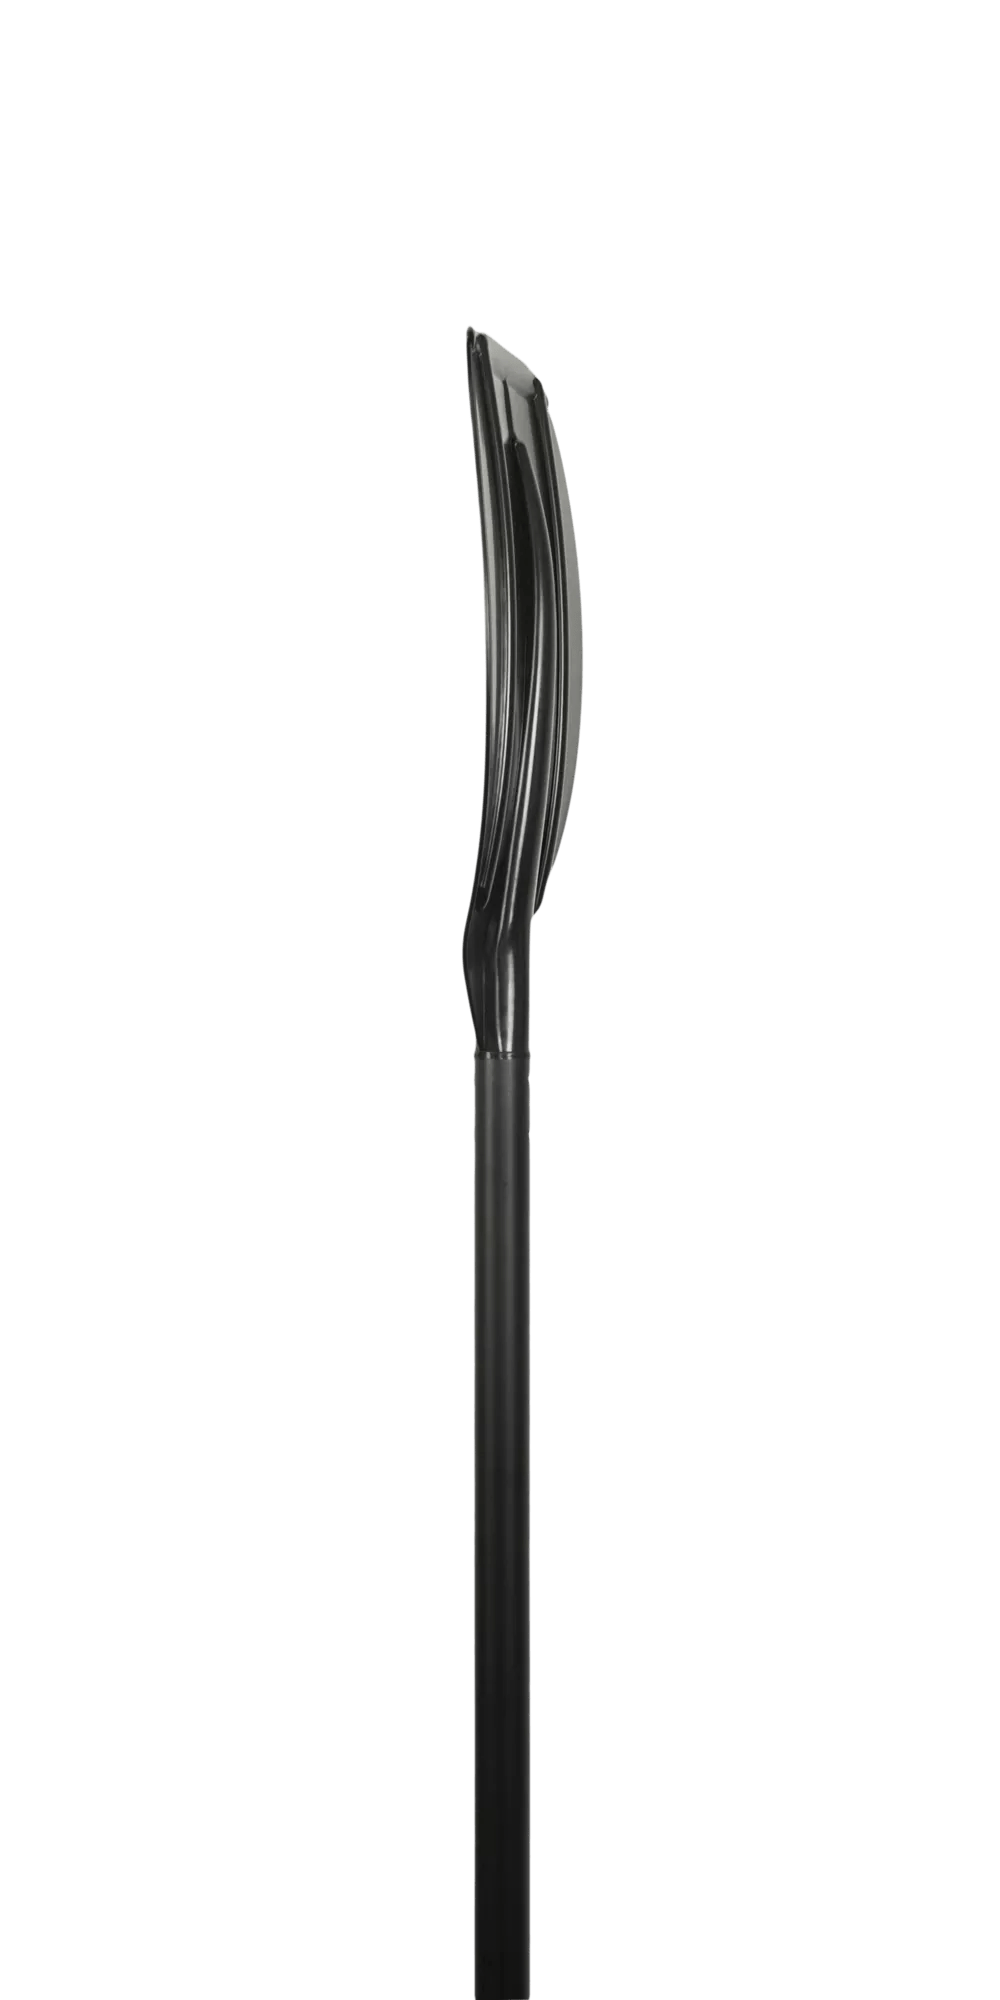 PELICAN - Adjustable Junior SUP Paddle 140-180 cm (55-70") - Black - PS1114-1-00 - SIDE